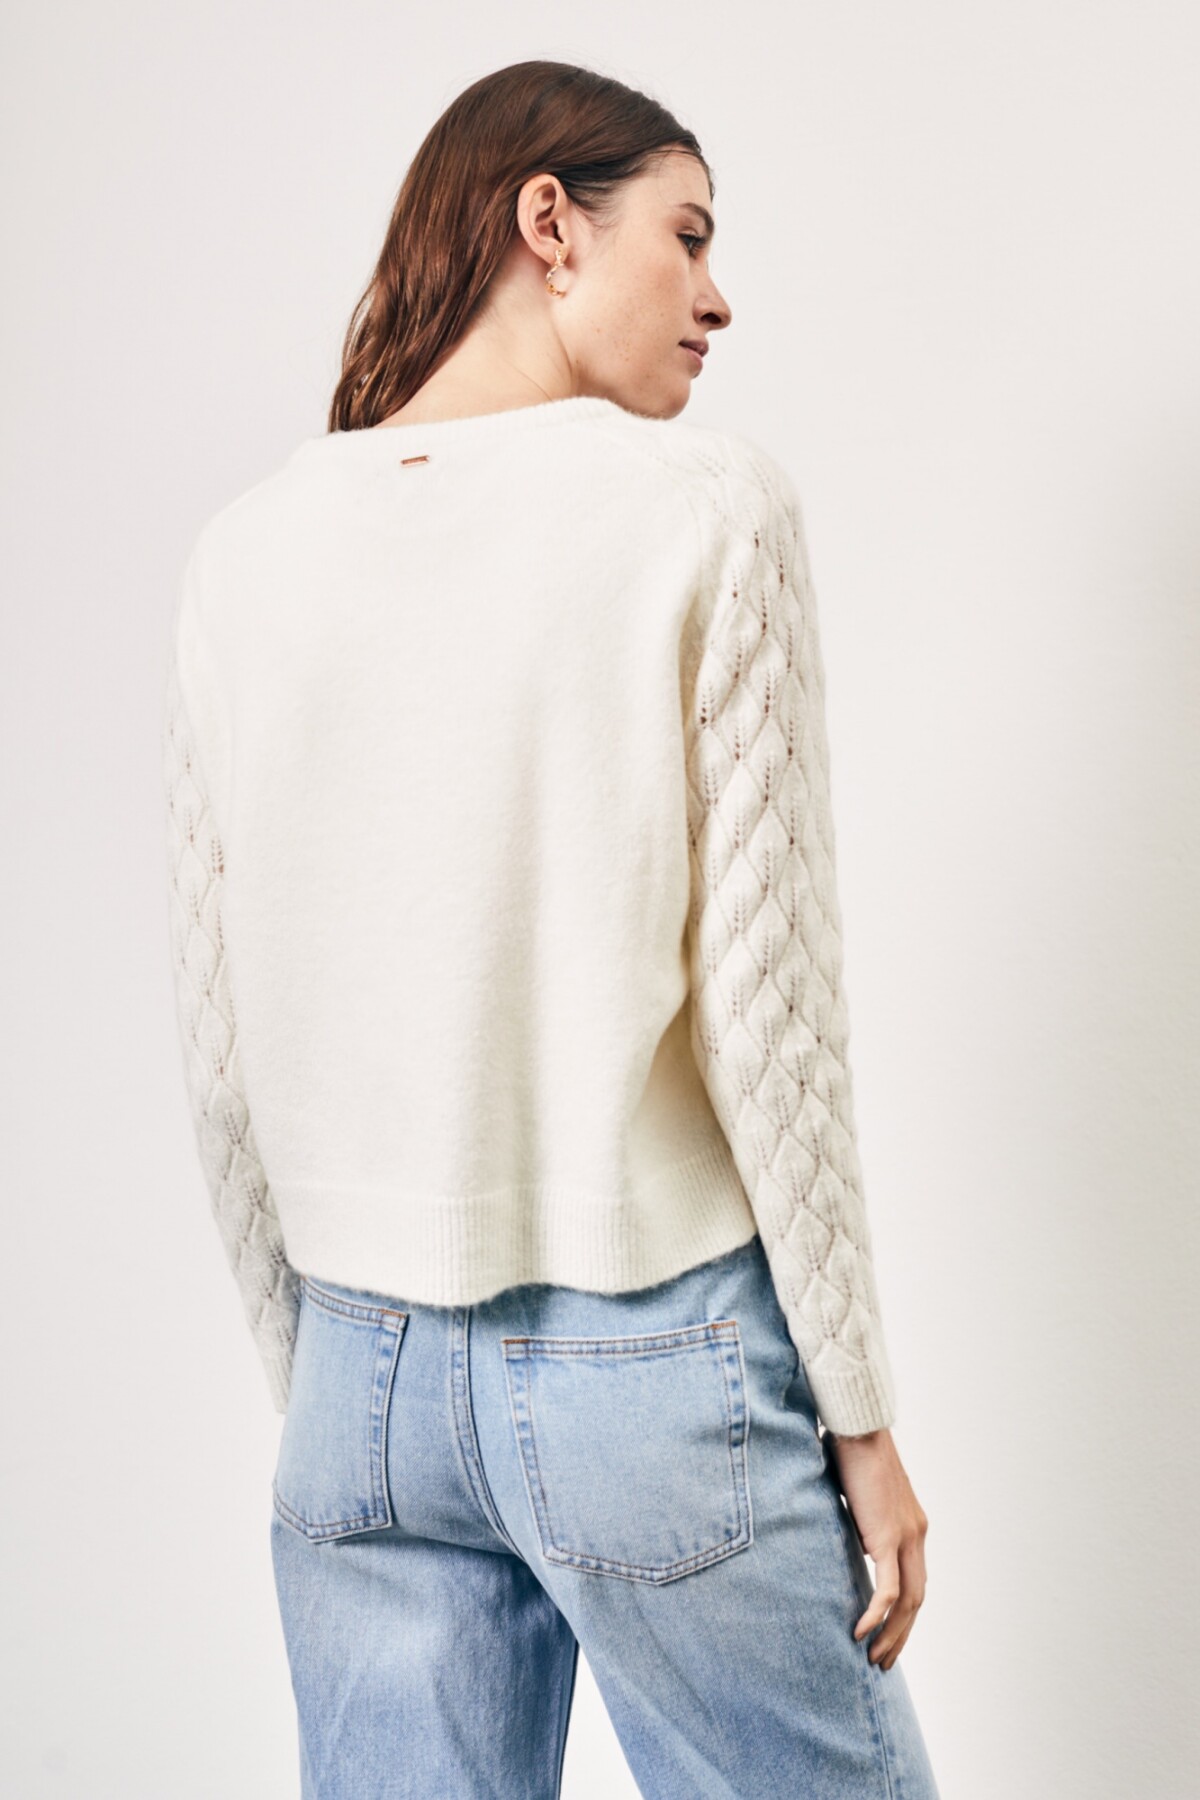 Sweater Textura Nácar